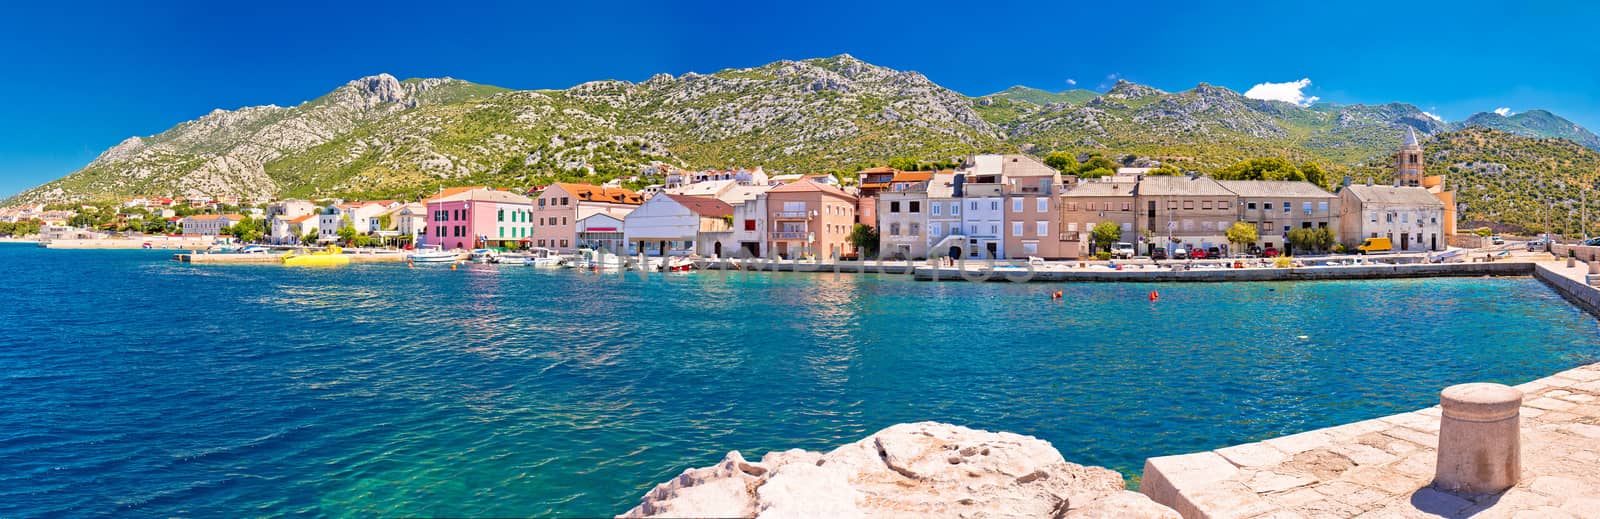 Town of Karlobag in Velebit channel panoramic view, coast of Croatia